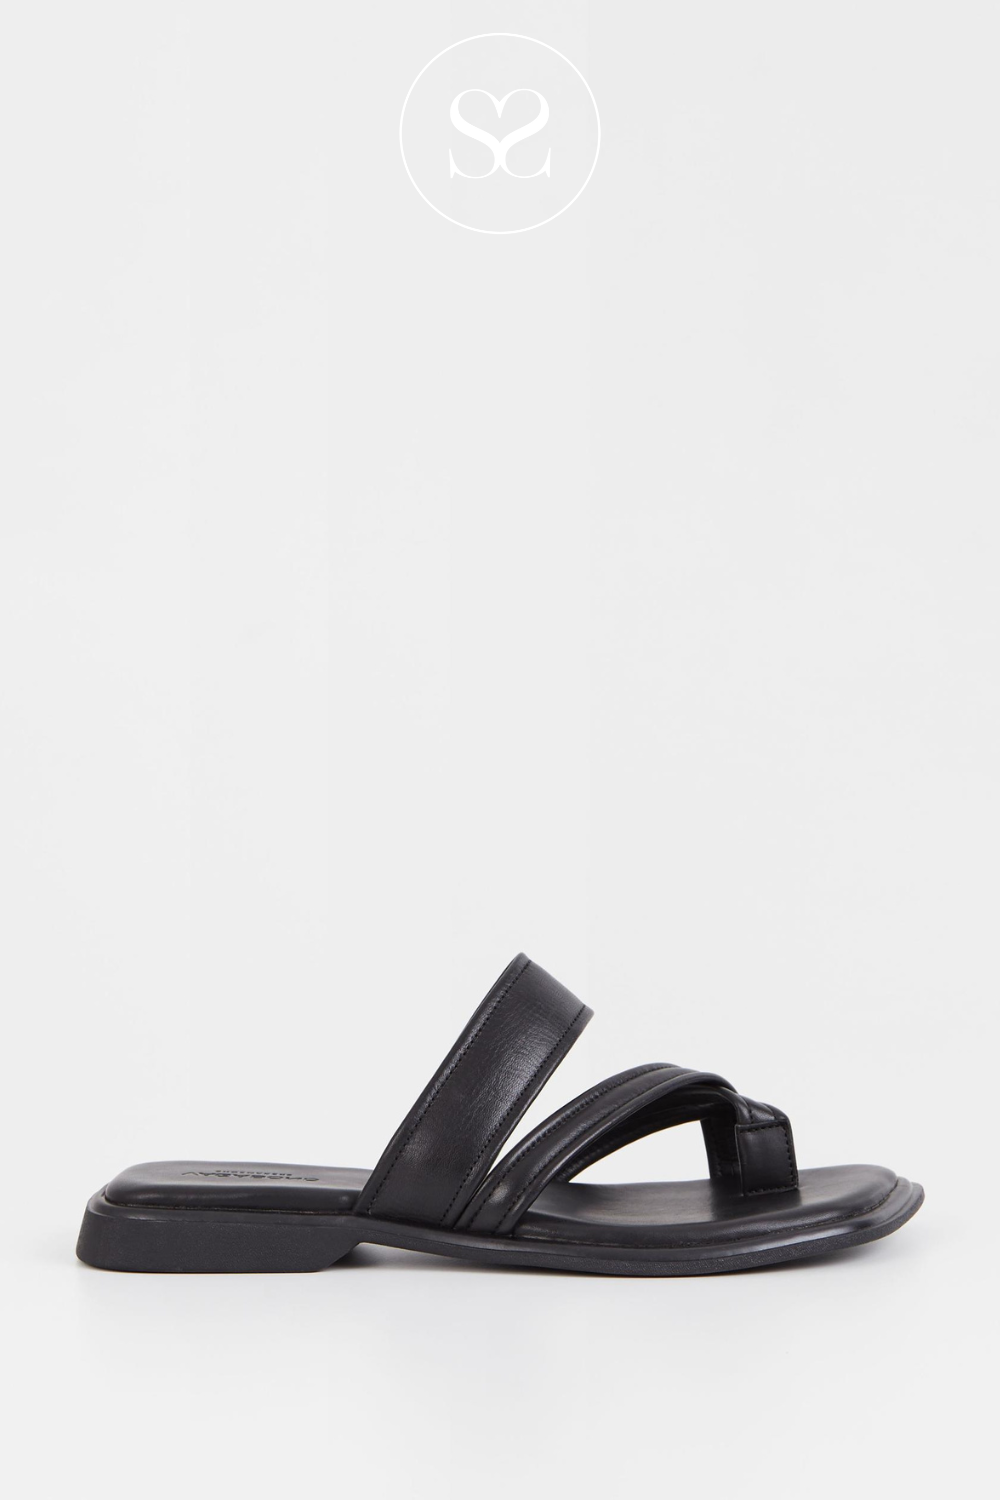 black leather flat slider sandals from vagabond